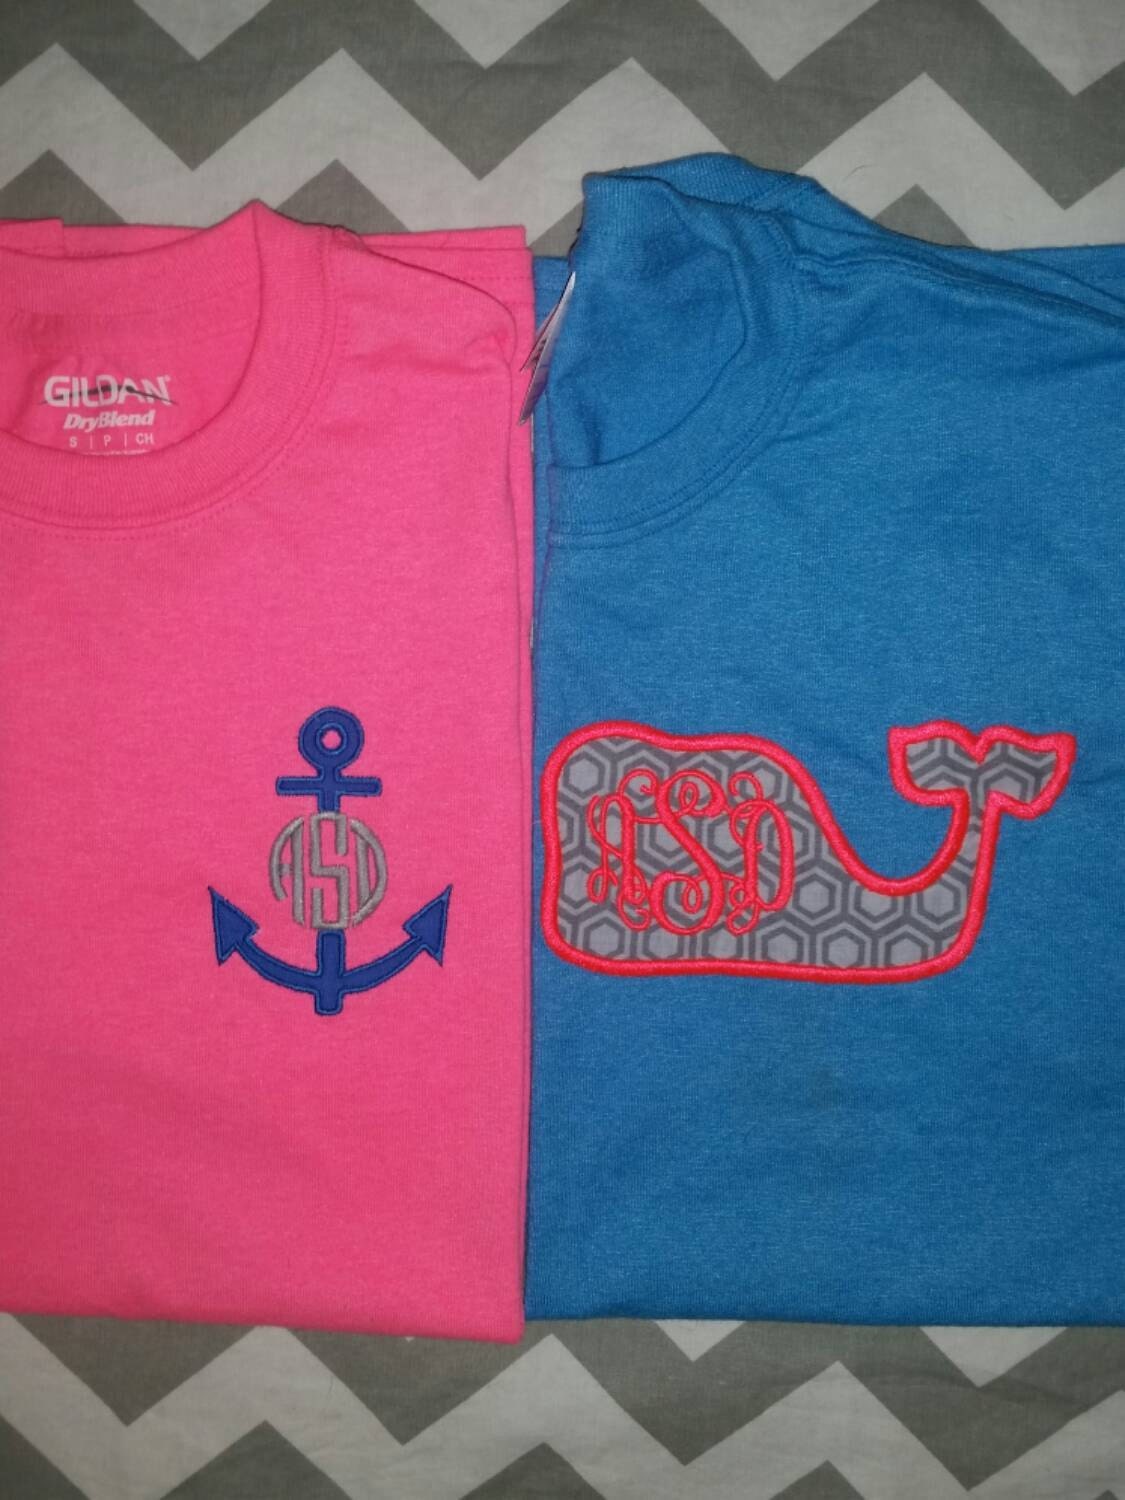 Ladies Nautical Shirts by BittyBoppy on Etsy